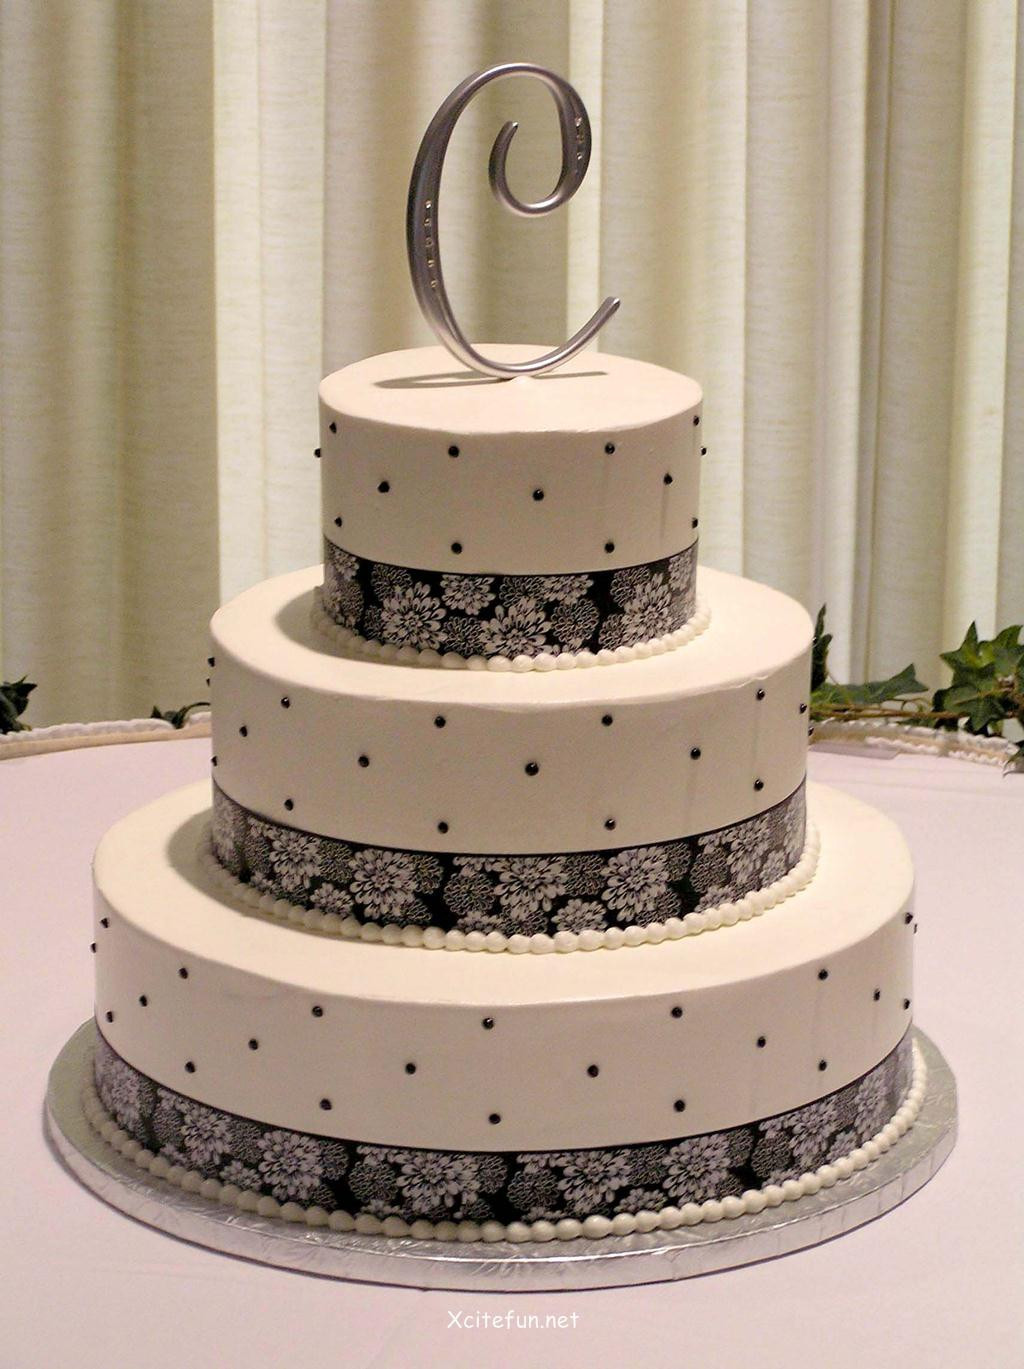 Wedding Cakes Decoration
 Wedding Cakes Decorating Ideas XciteFun